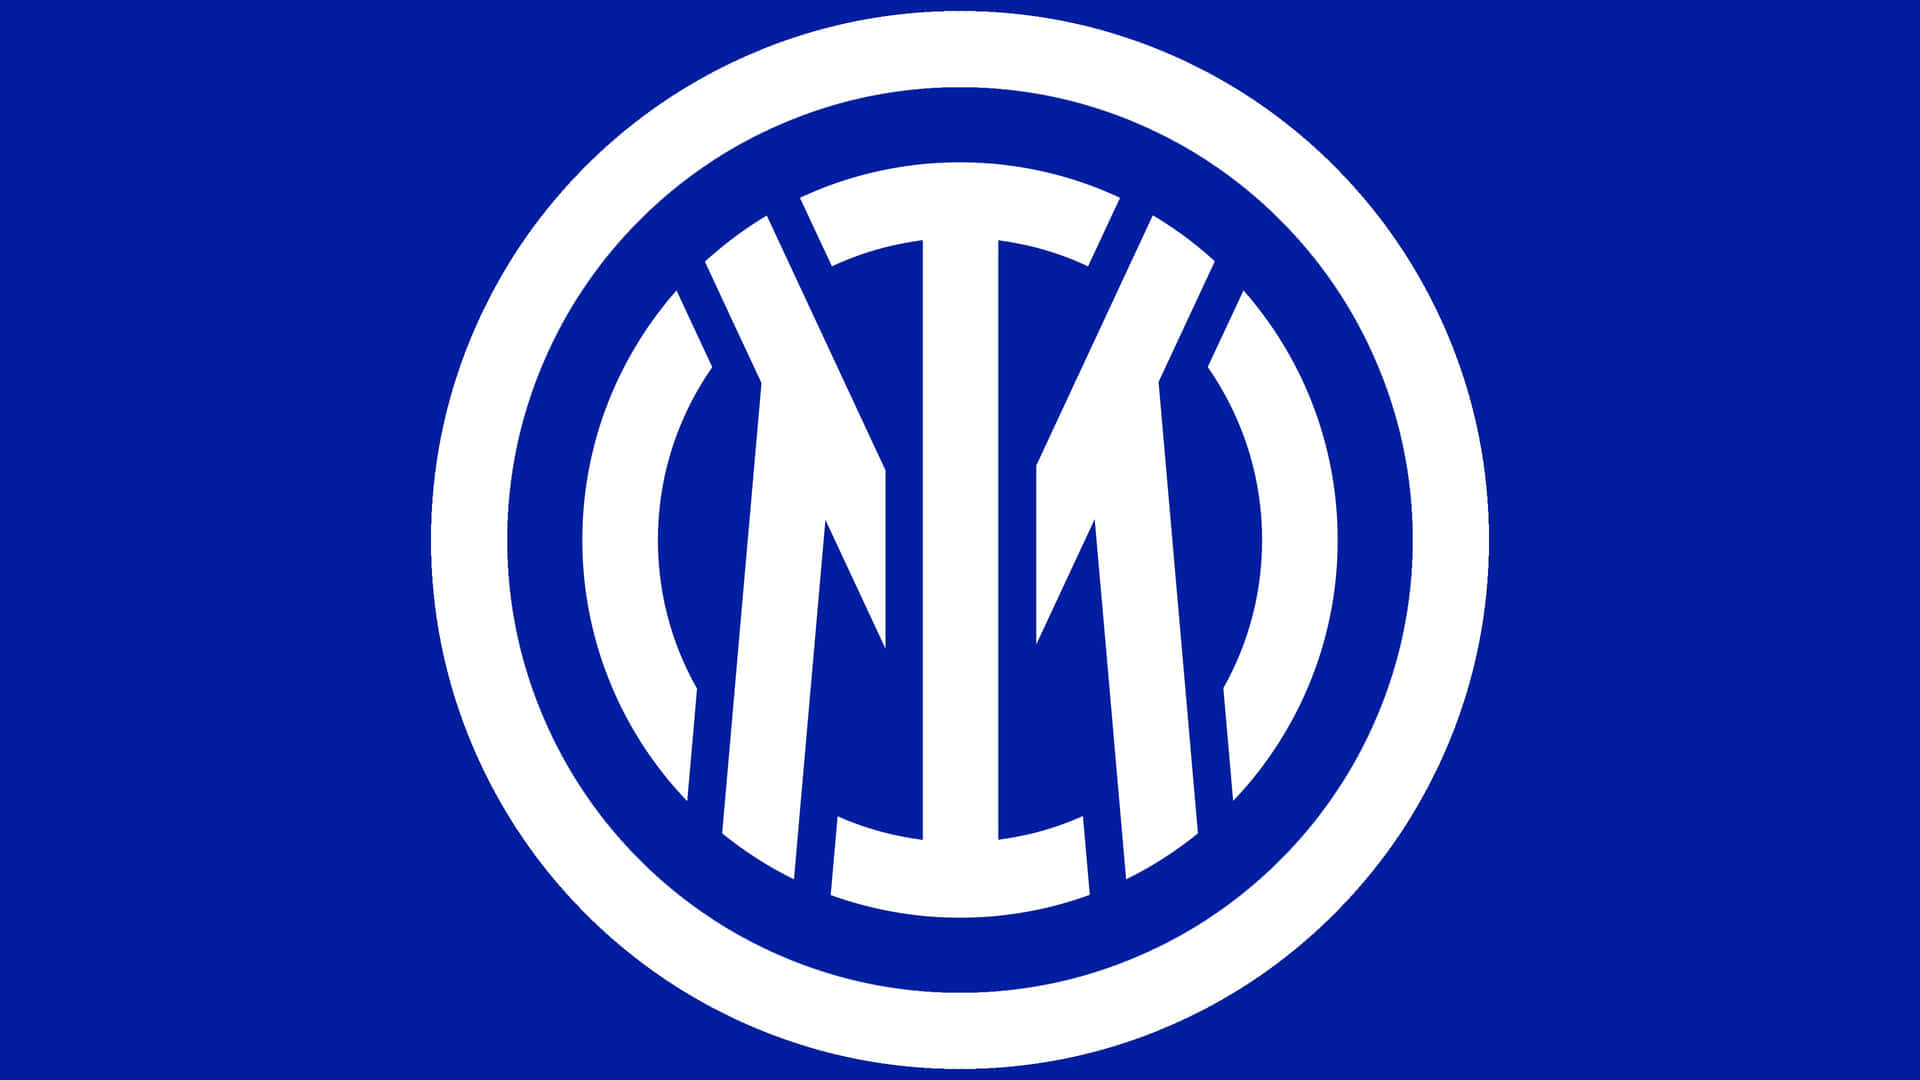 Intermediate Inter Milan Official Logo Wallpaper